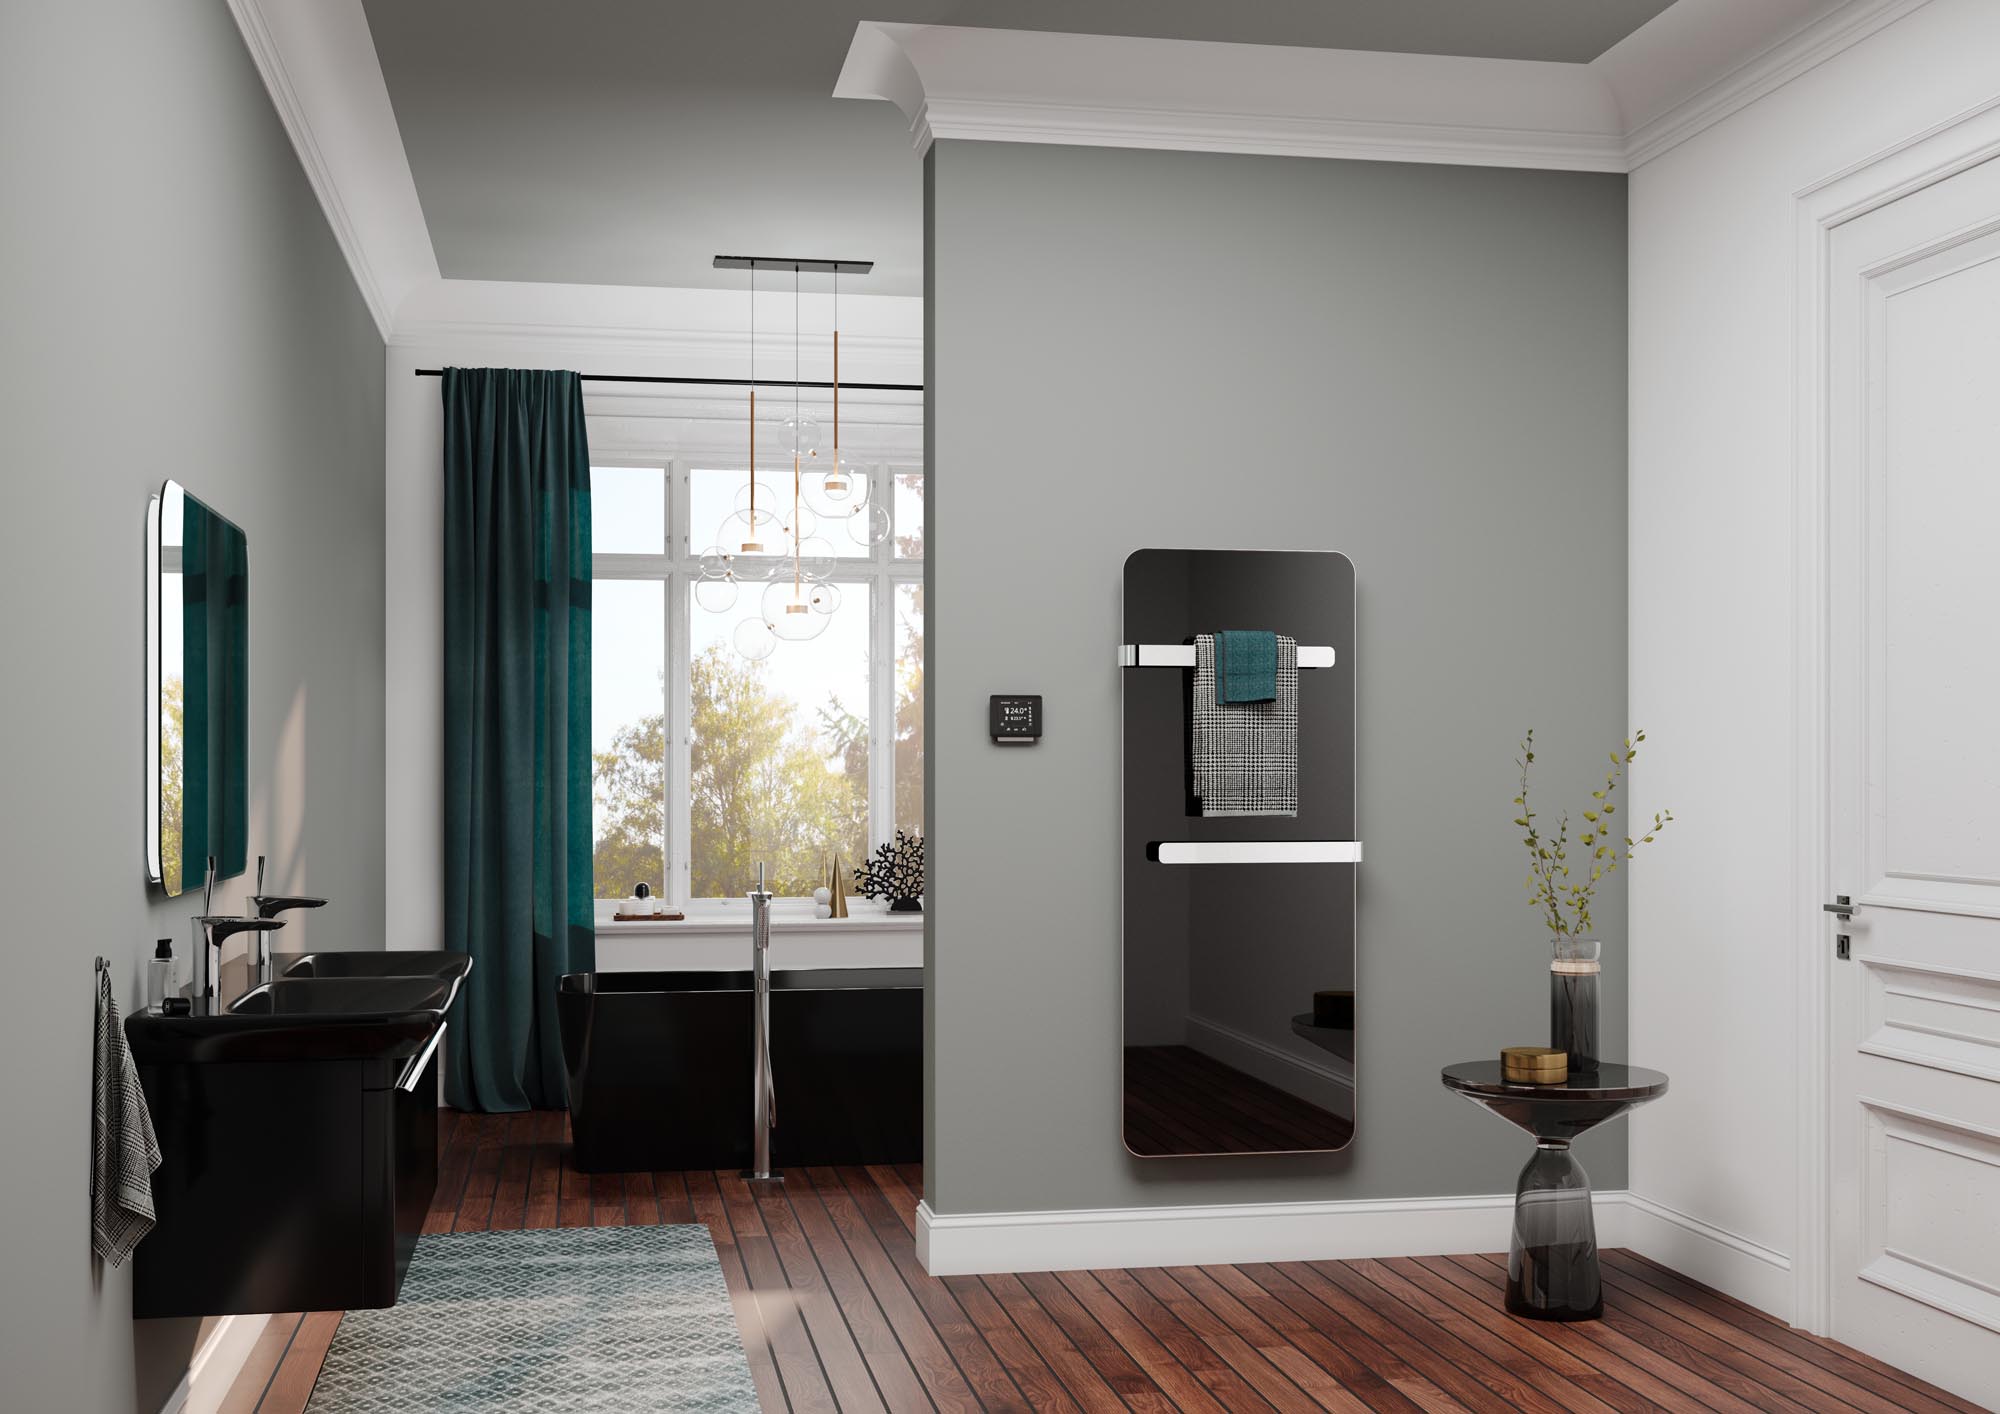 Kermi Elveo design and bathroom radiators – state-of-the-art design. Heat via infrared.